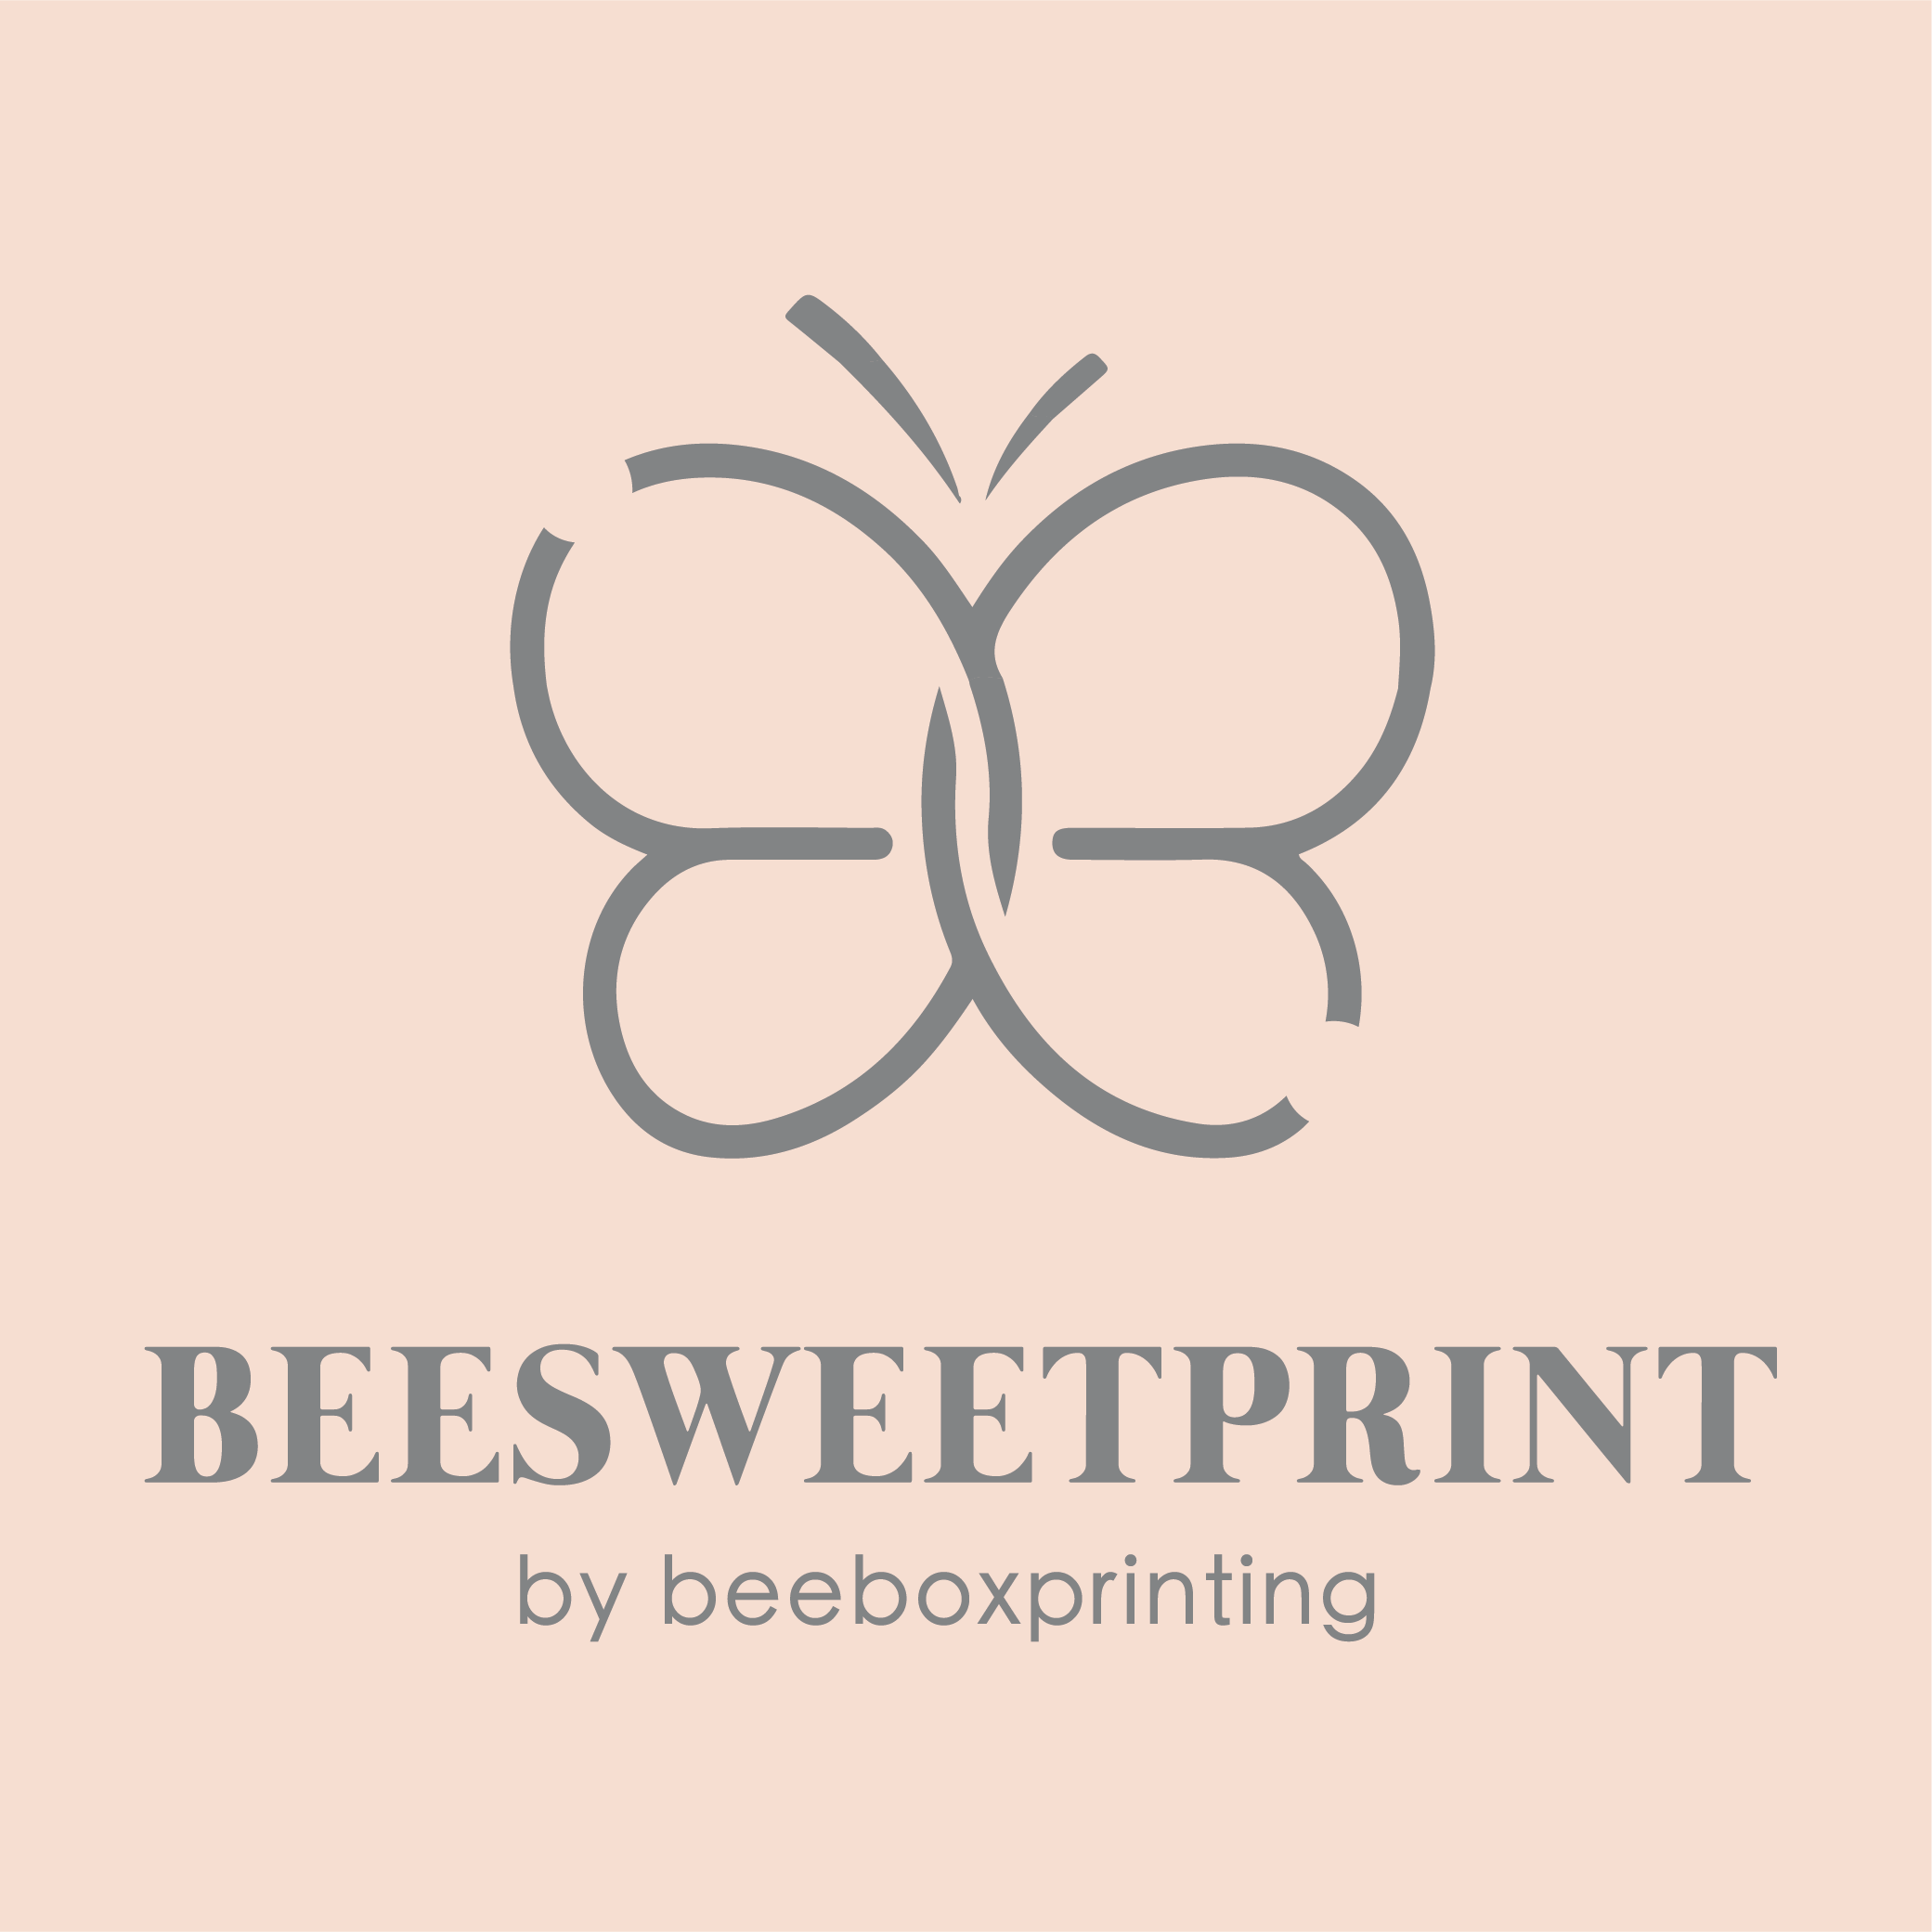 Beesweetprint